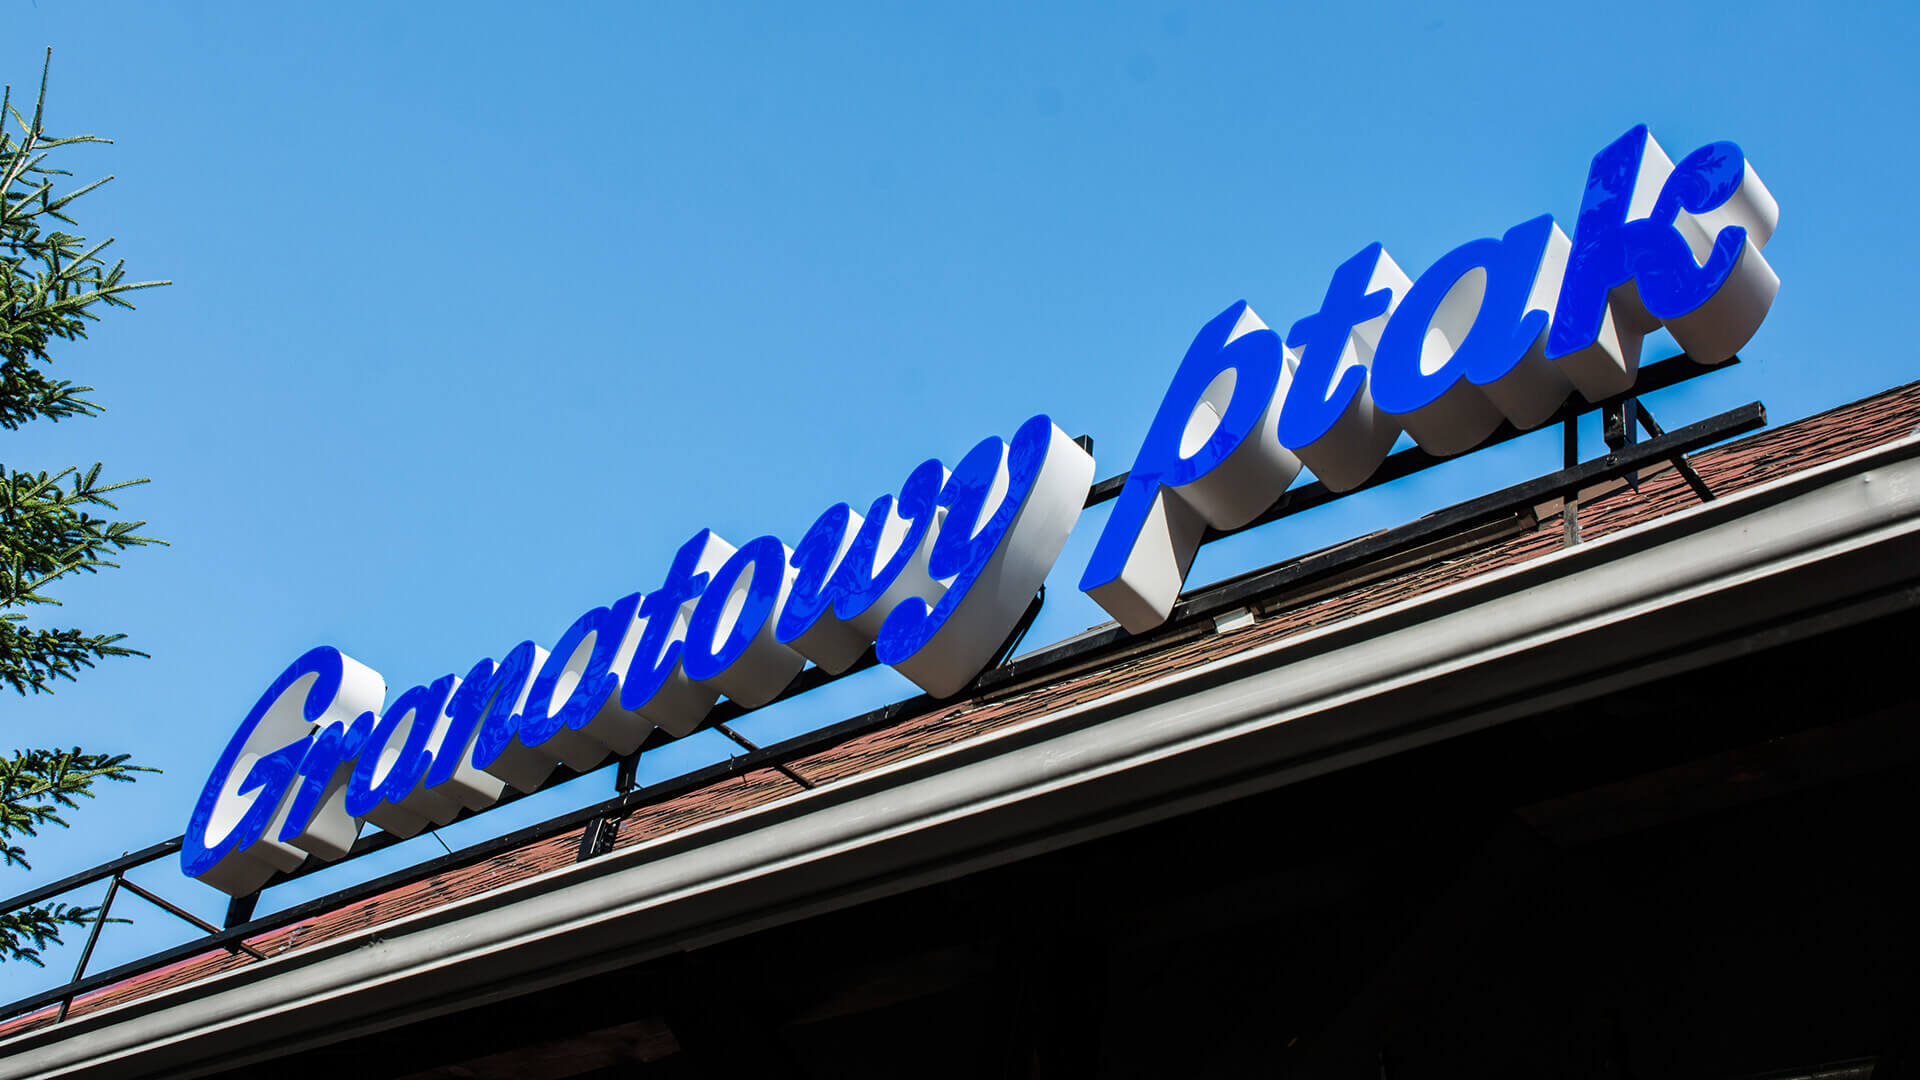 marine oiseau restaurant - letters-from-plexi-blue-blue-bird-letter-on-the-cornice-of-roof lettering-led-lighting-spatial-lettering-blue-lighting 